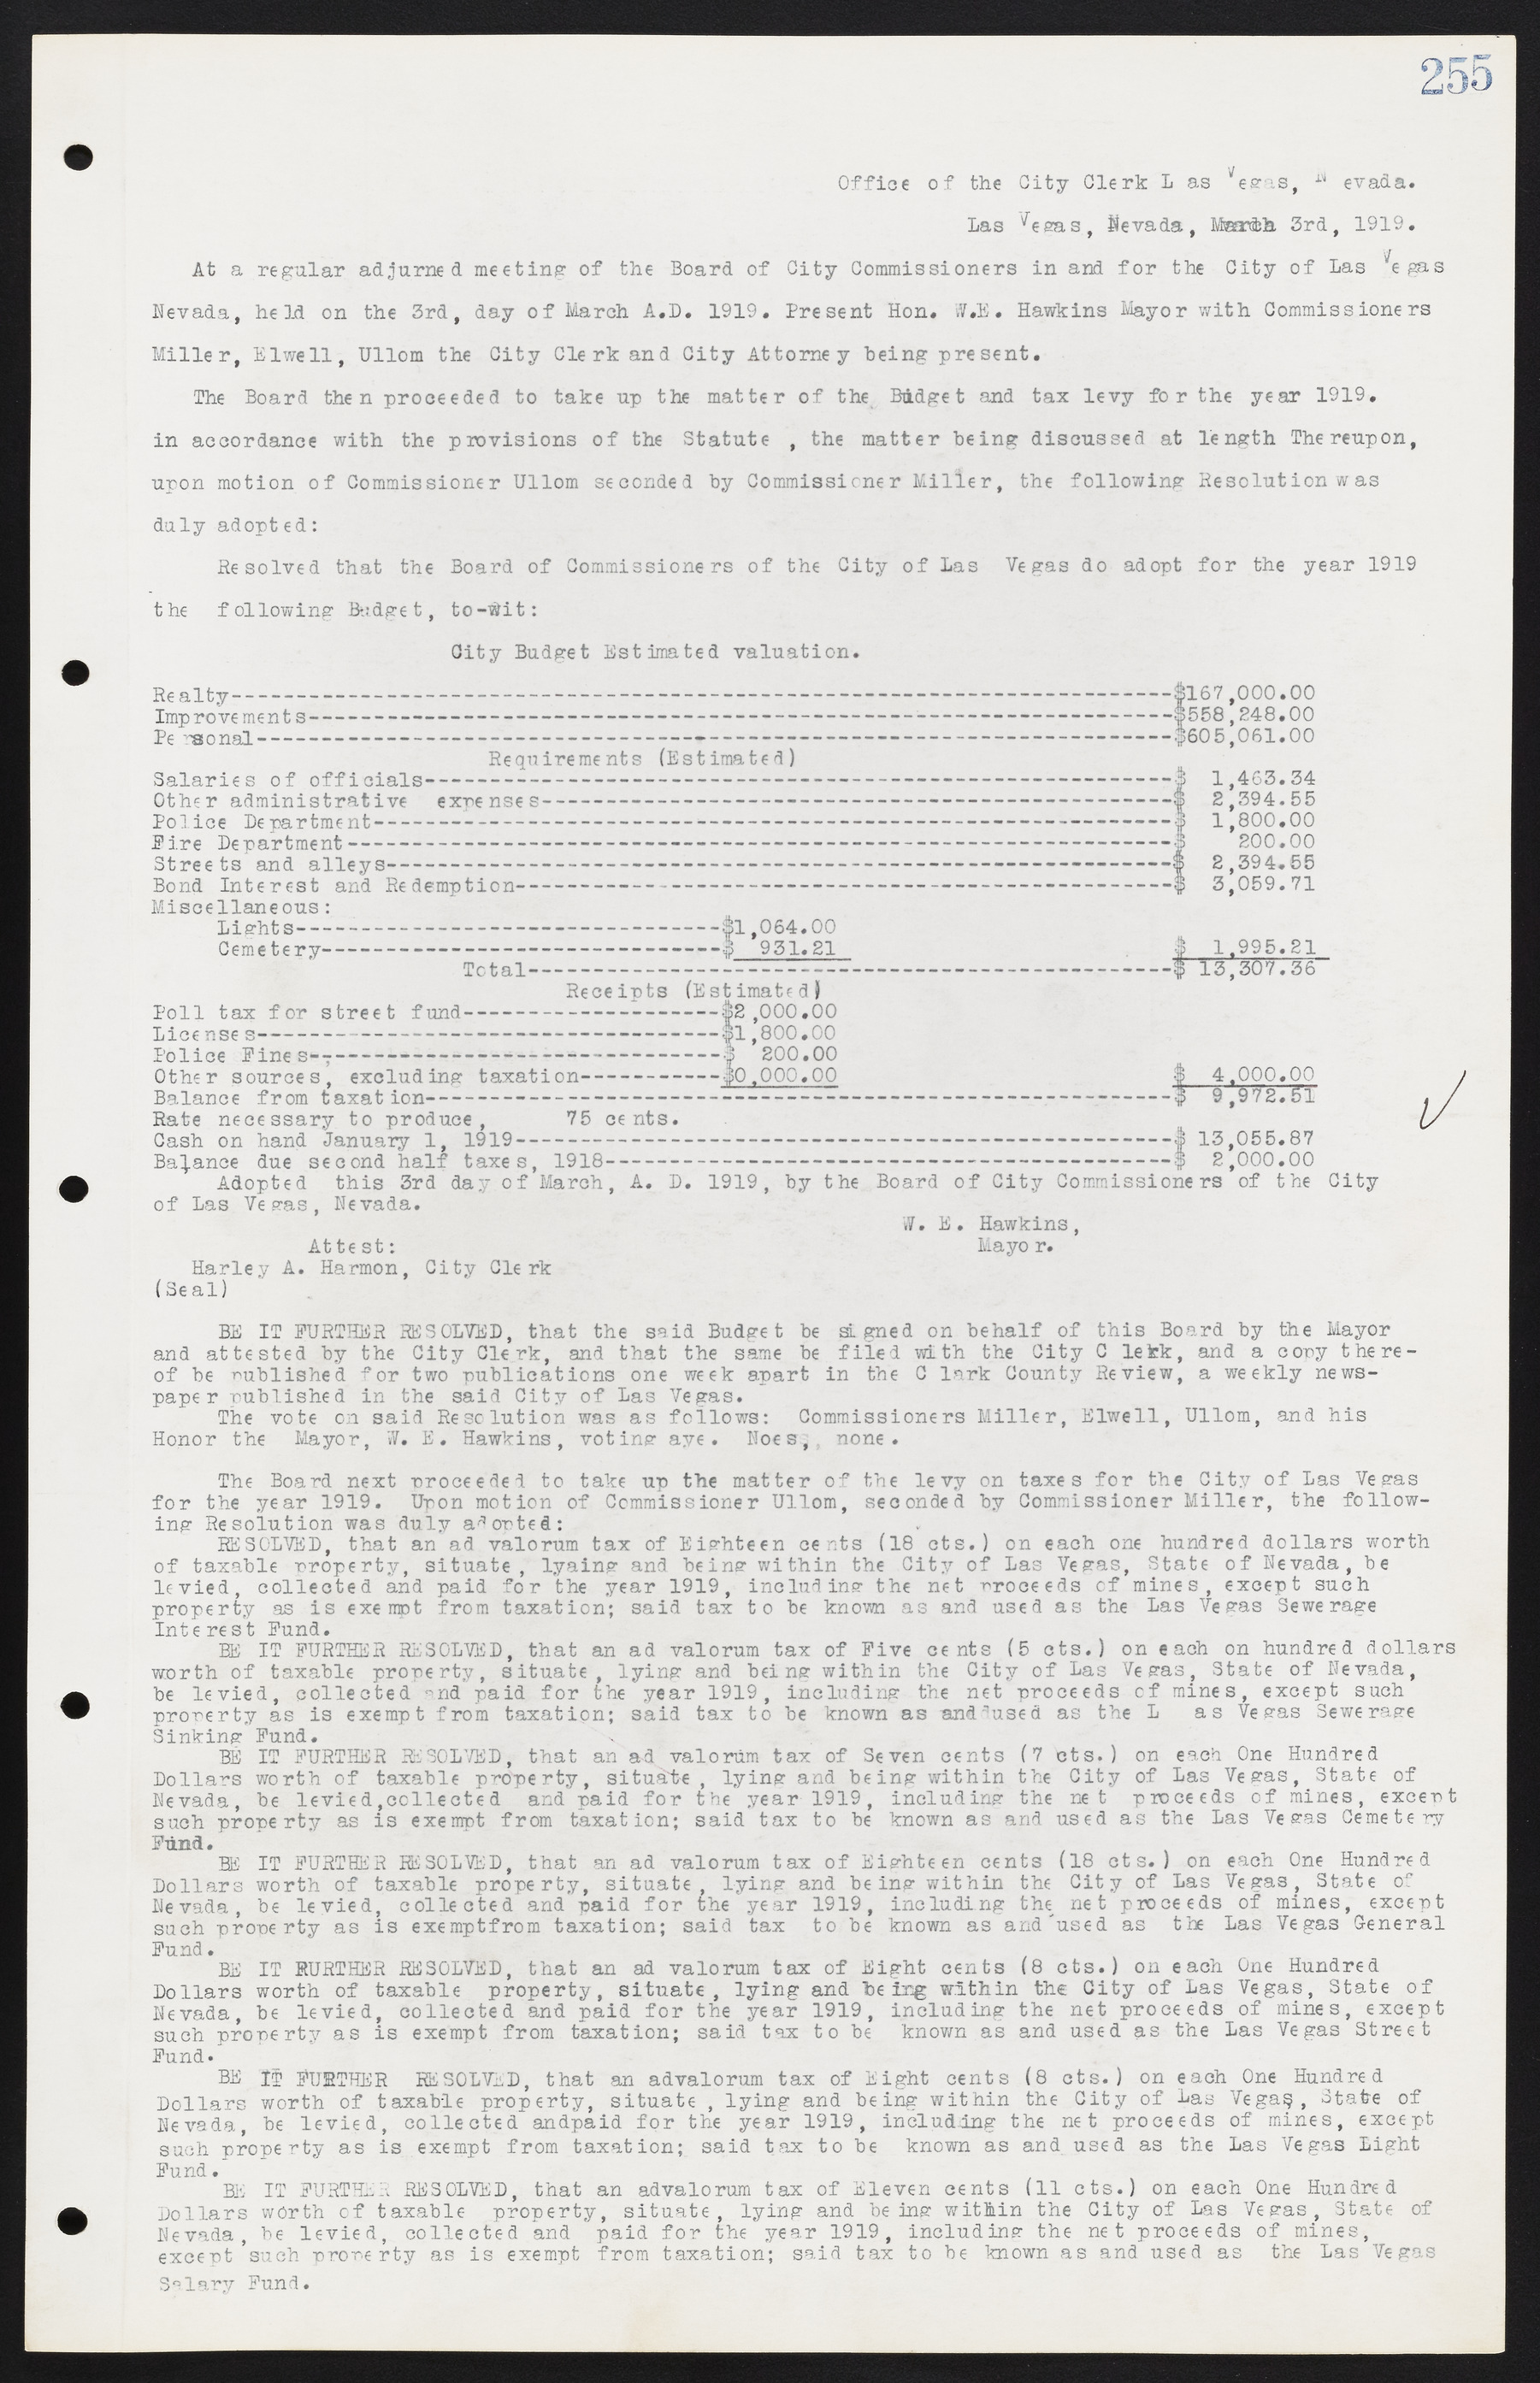 Las Vegas City Commission Minutes, June 22, 1911 to February 7, 1922, lvc000001-271